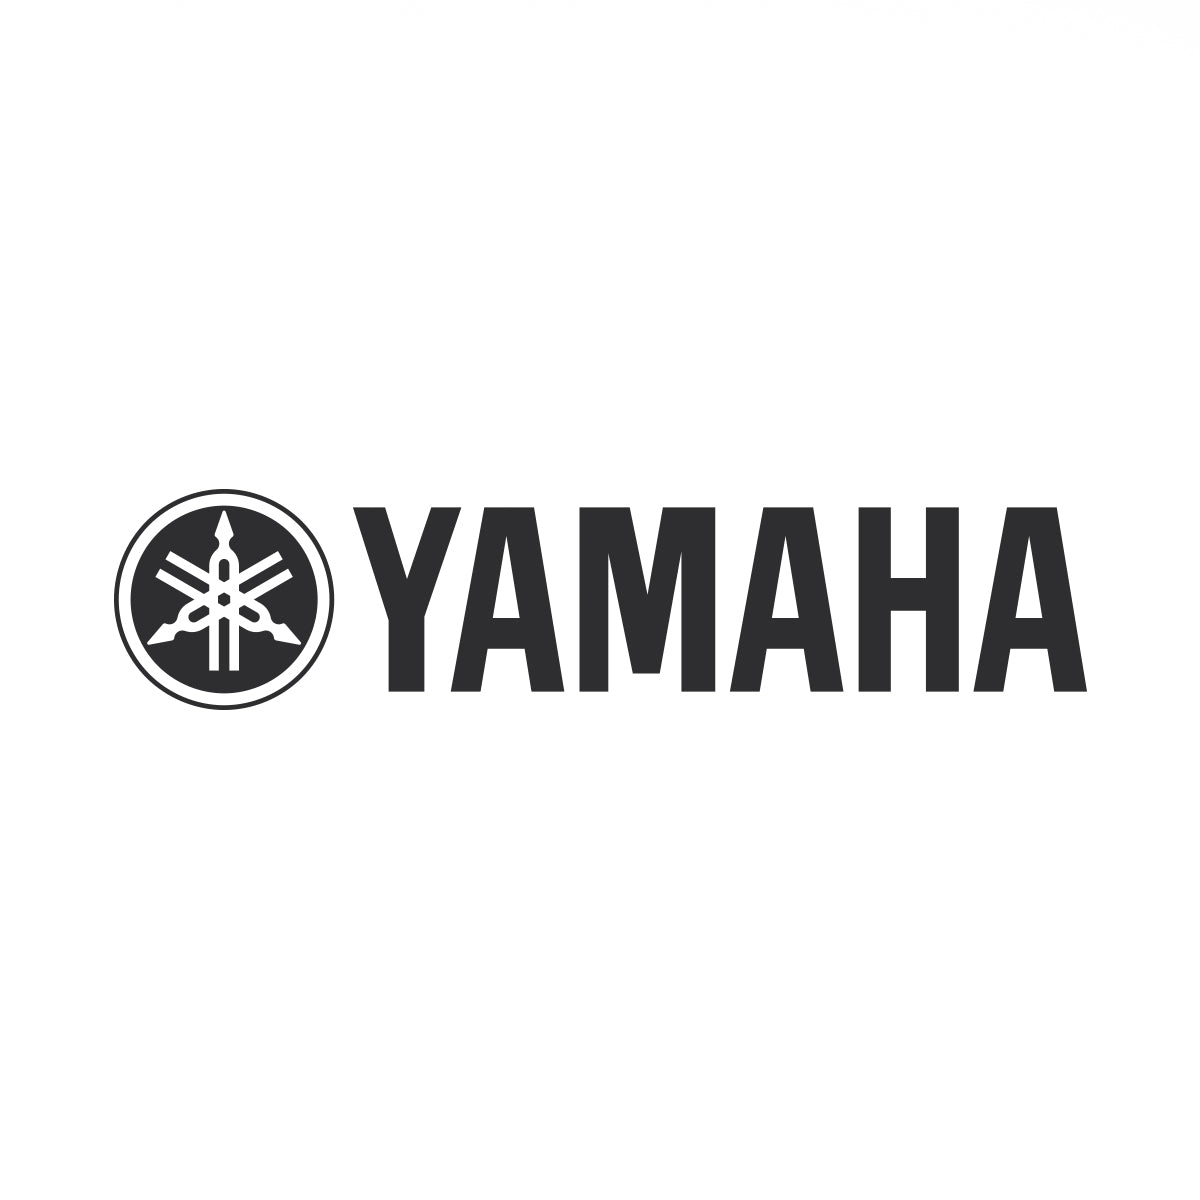 Yamaha Dekor Kits